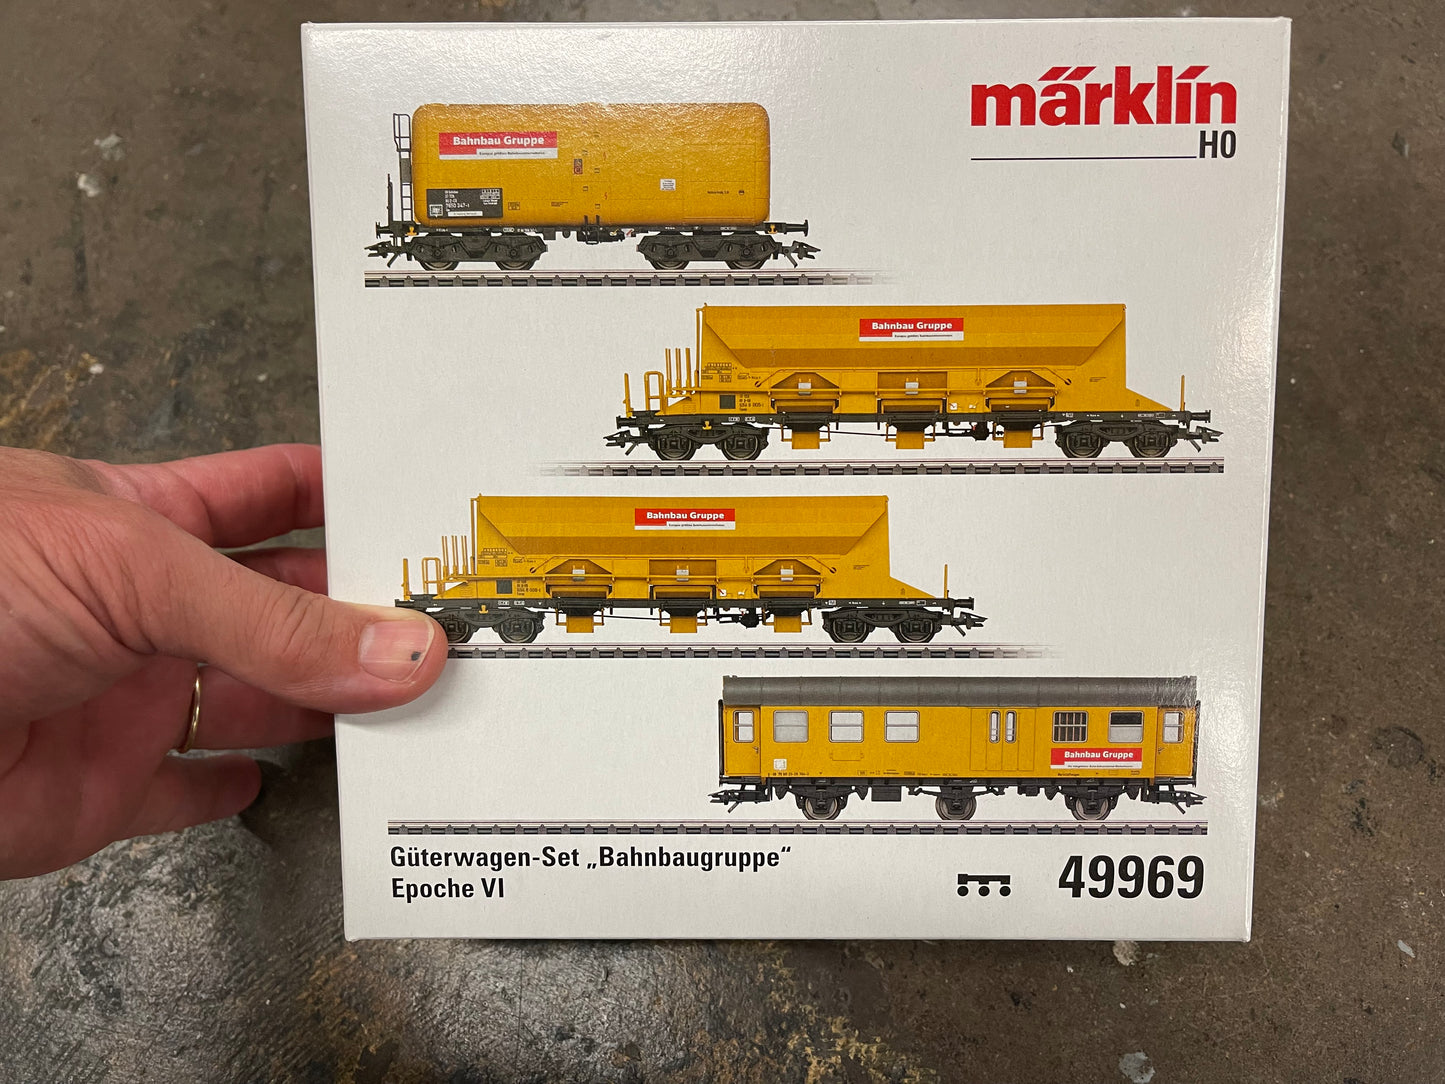 Marklin 49969 - "Track Laying Group" Freight Car Set at Ajckids.com